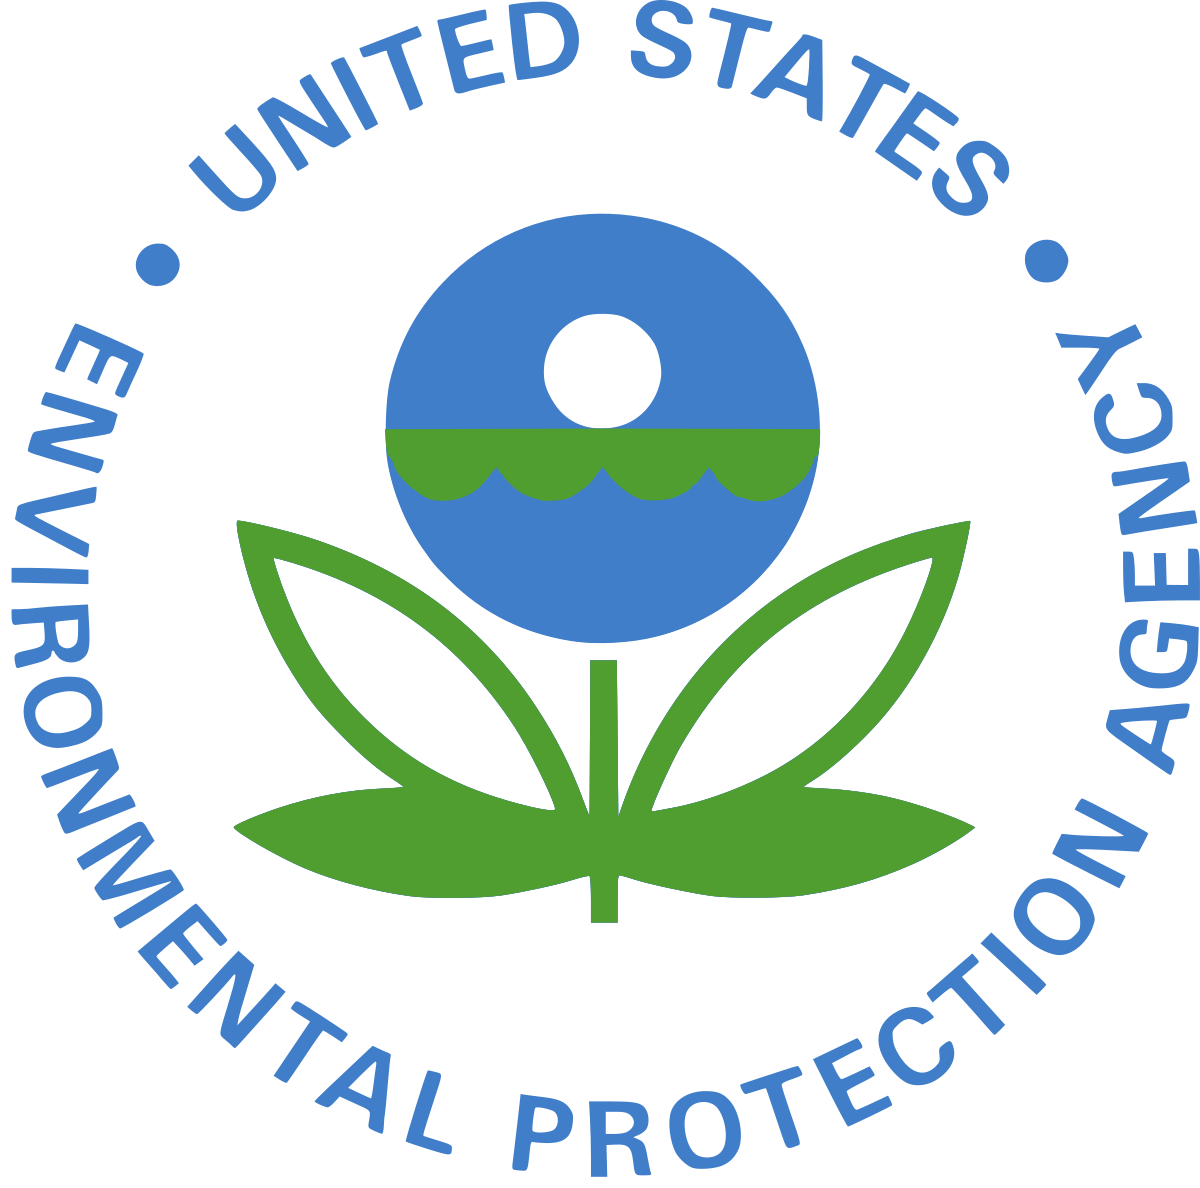 U.S. Senators Call on USEPA to Update PFAS Plan